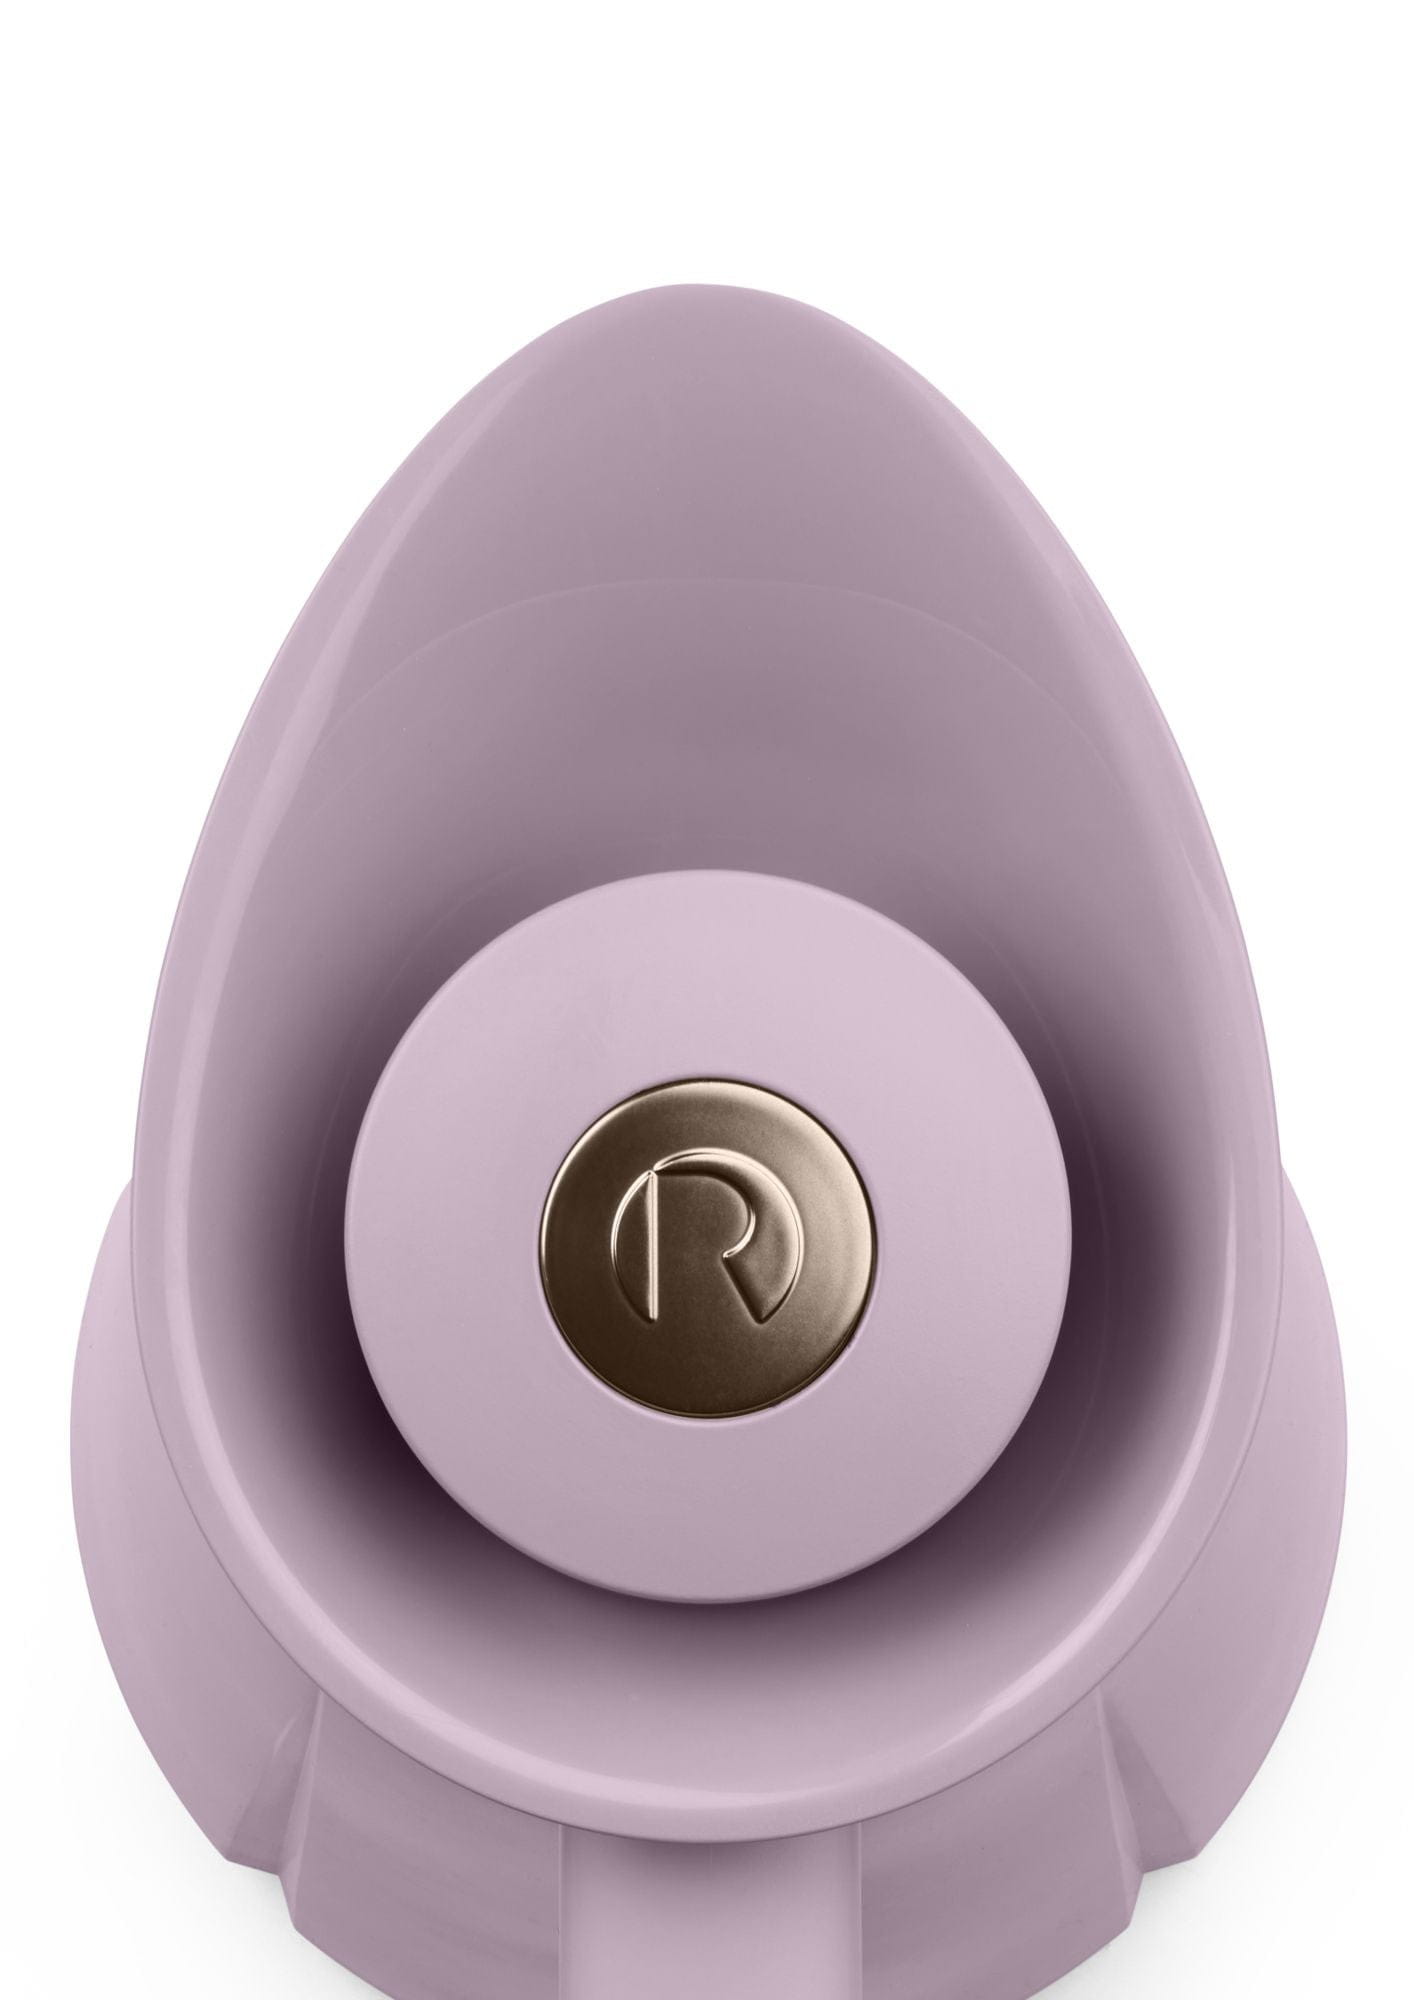 Rosendahl GC Thermo Pan 1 L, Lavender